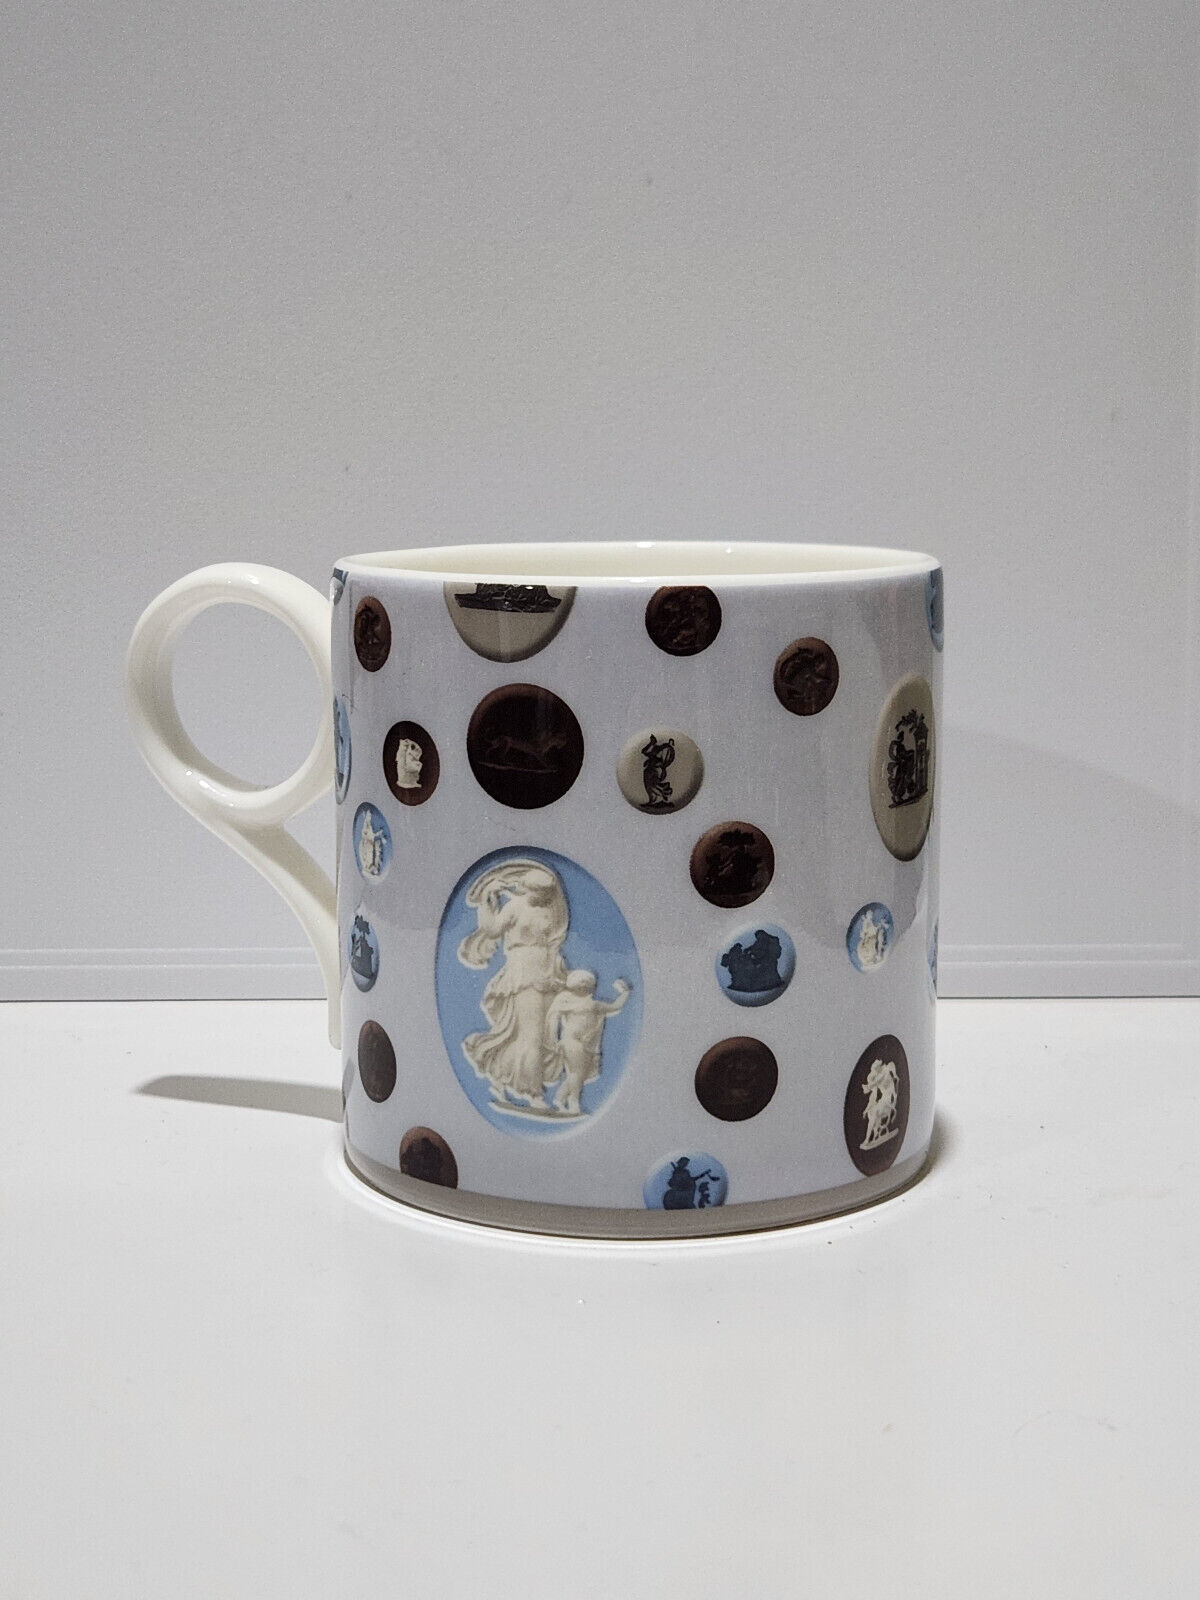 Wedgewood Porcelain Commemorative Aniversary Coffee Mug